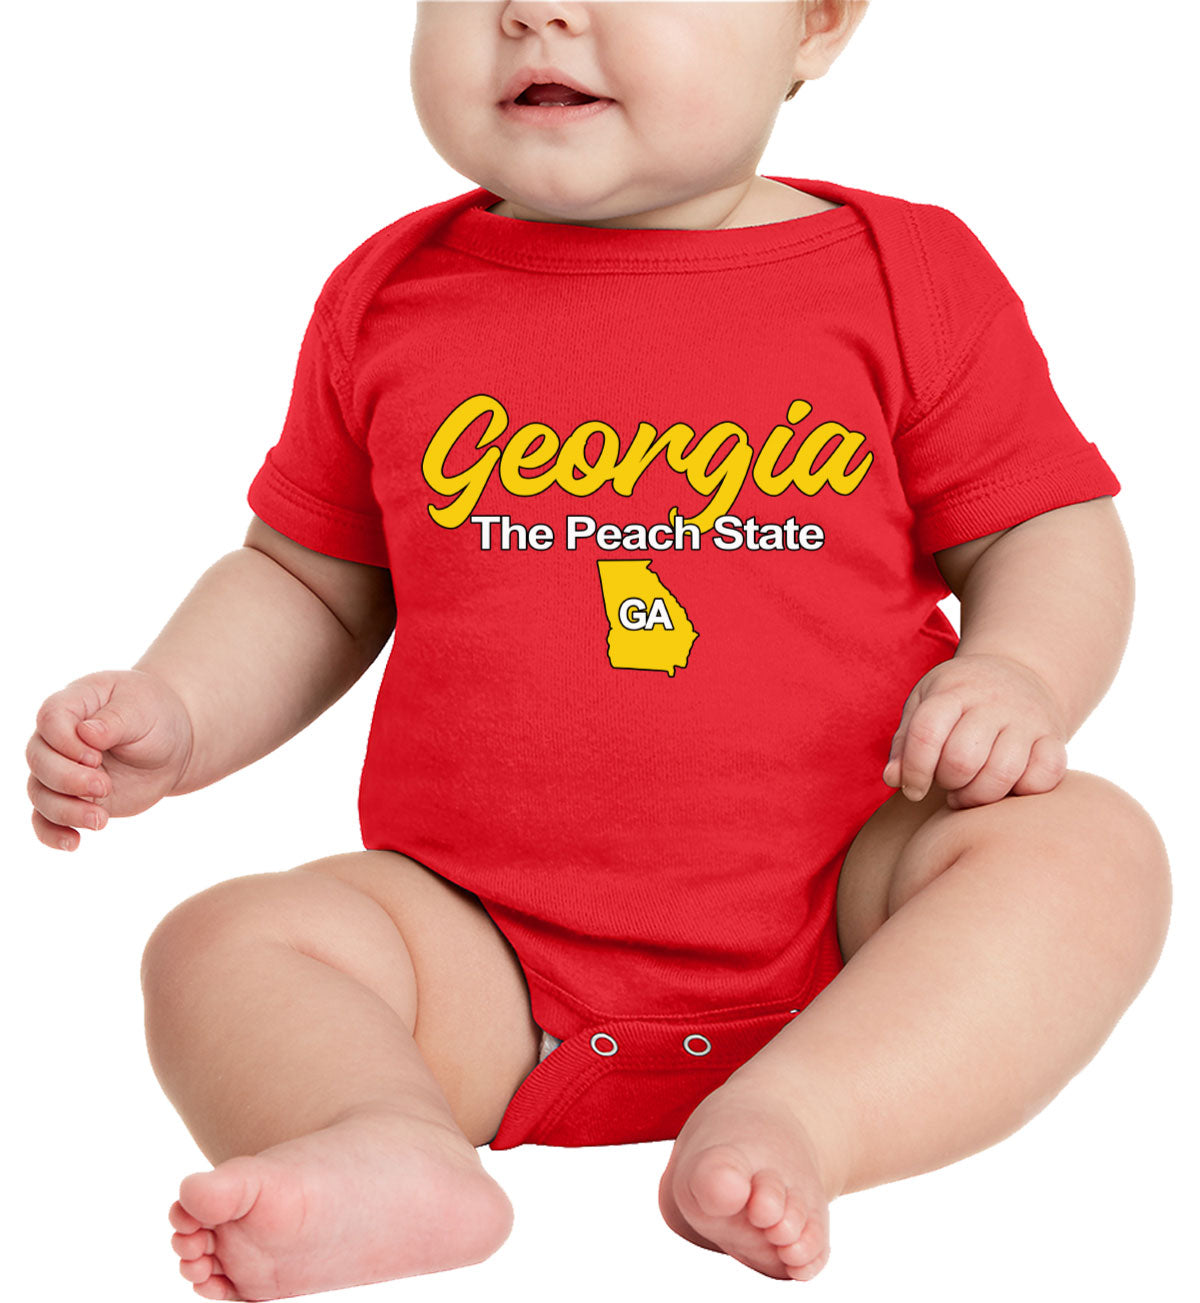 Georgia The Peach State Baby Onesie